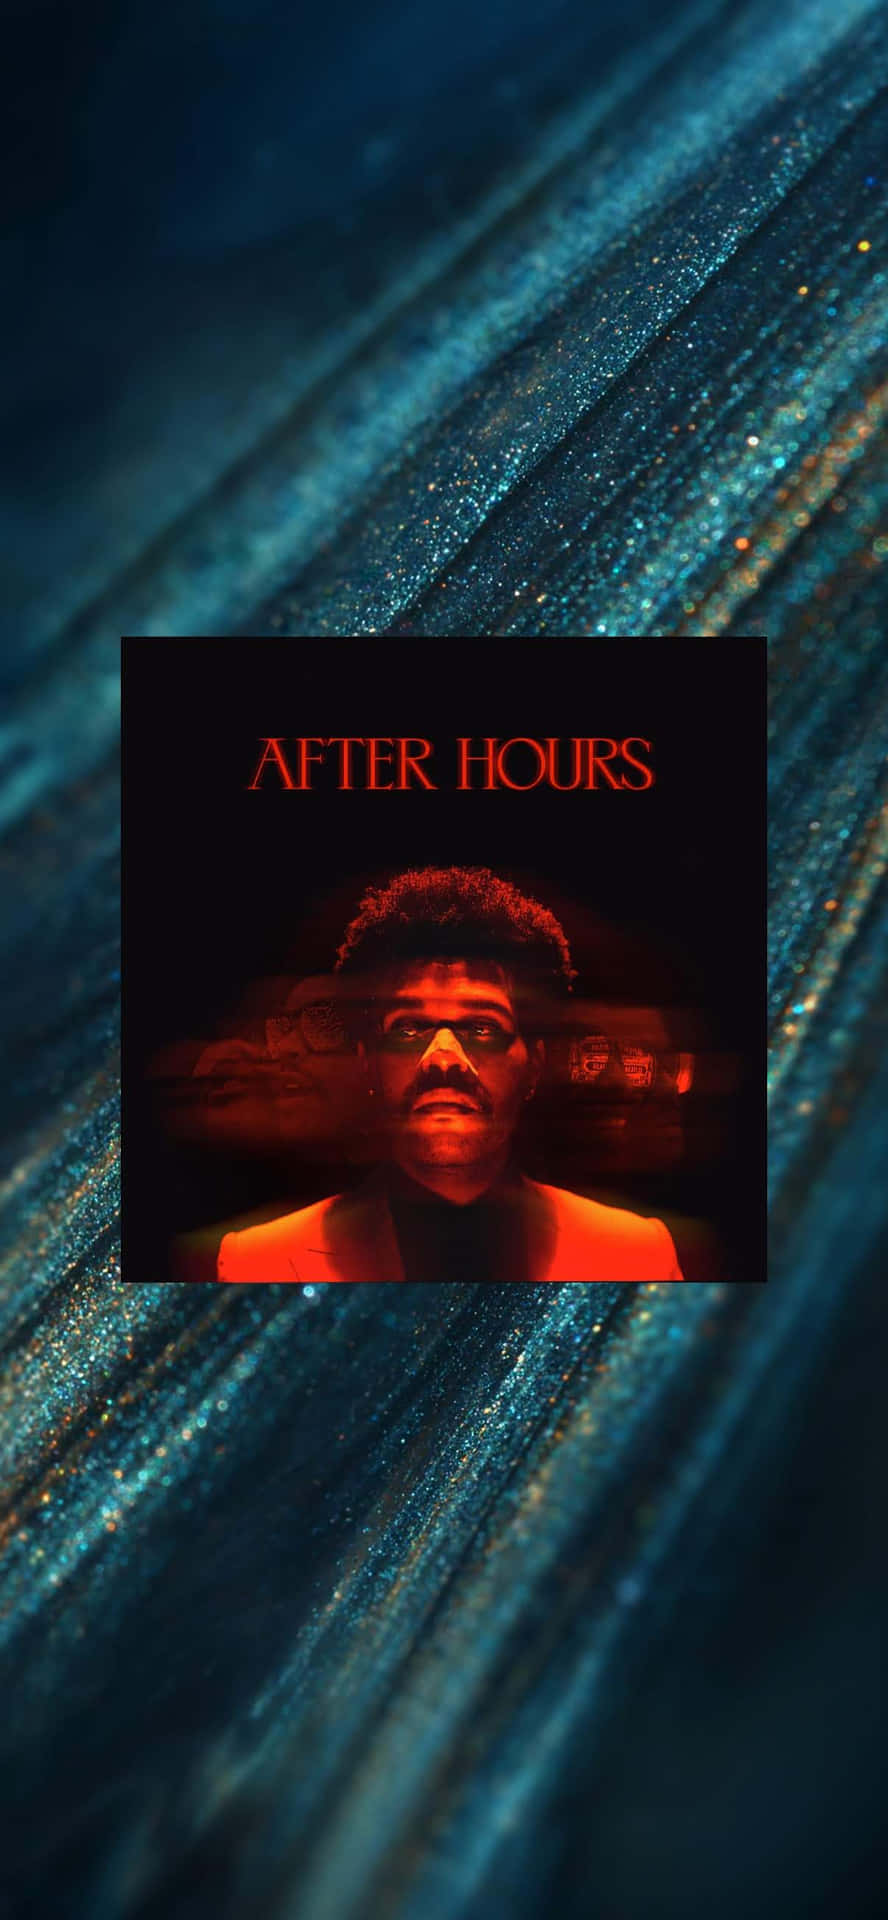 The Weeknd - After Hours Album Art Wallpaper